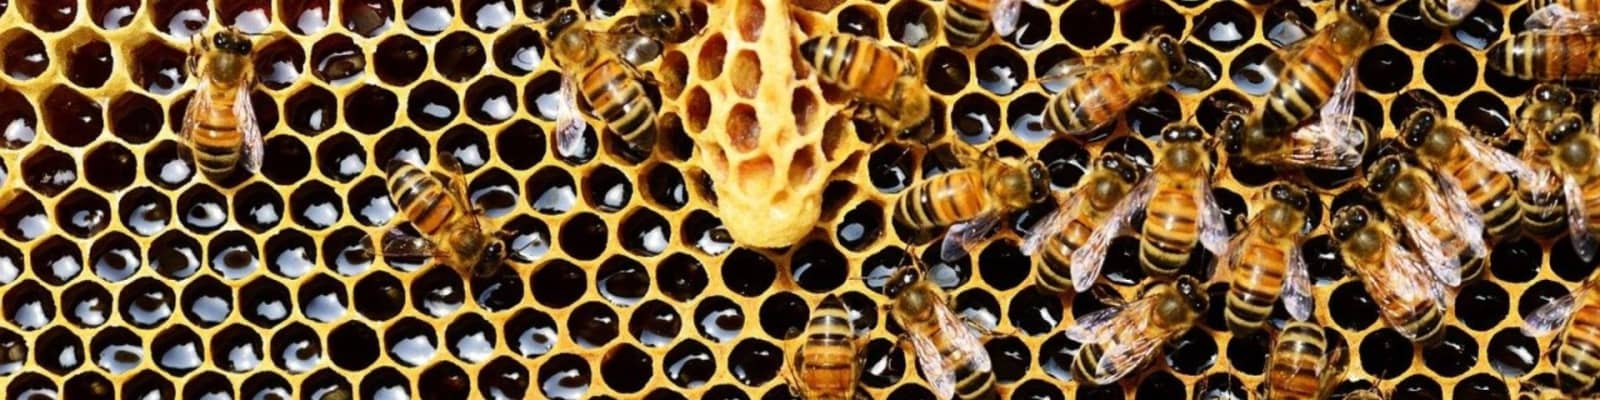 bee removals in Germiston